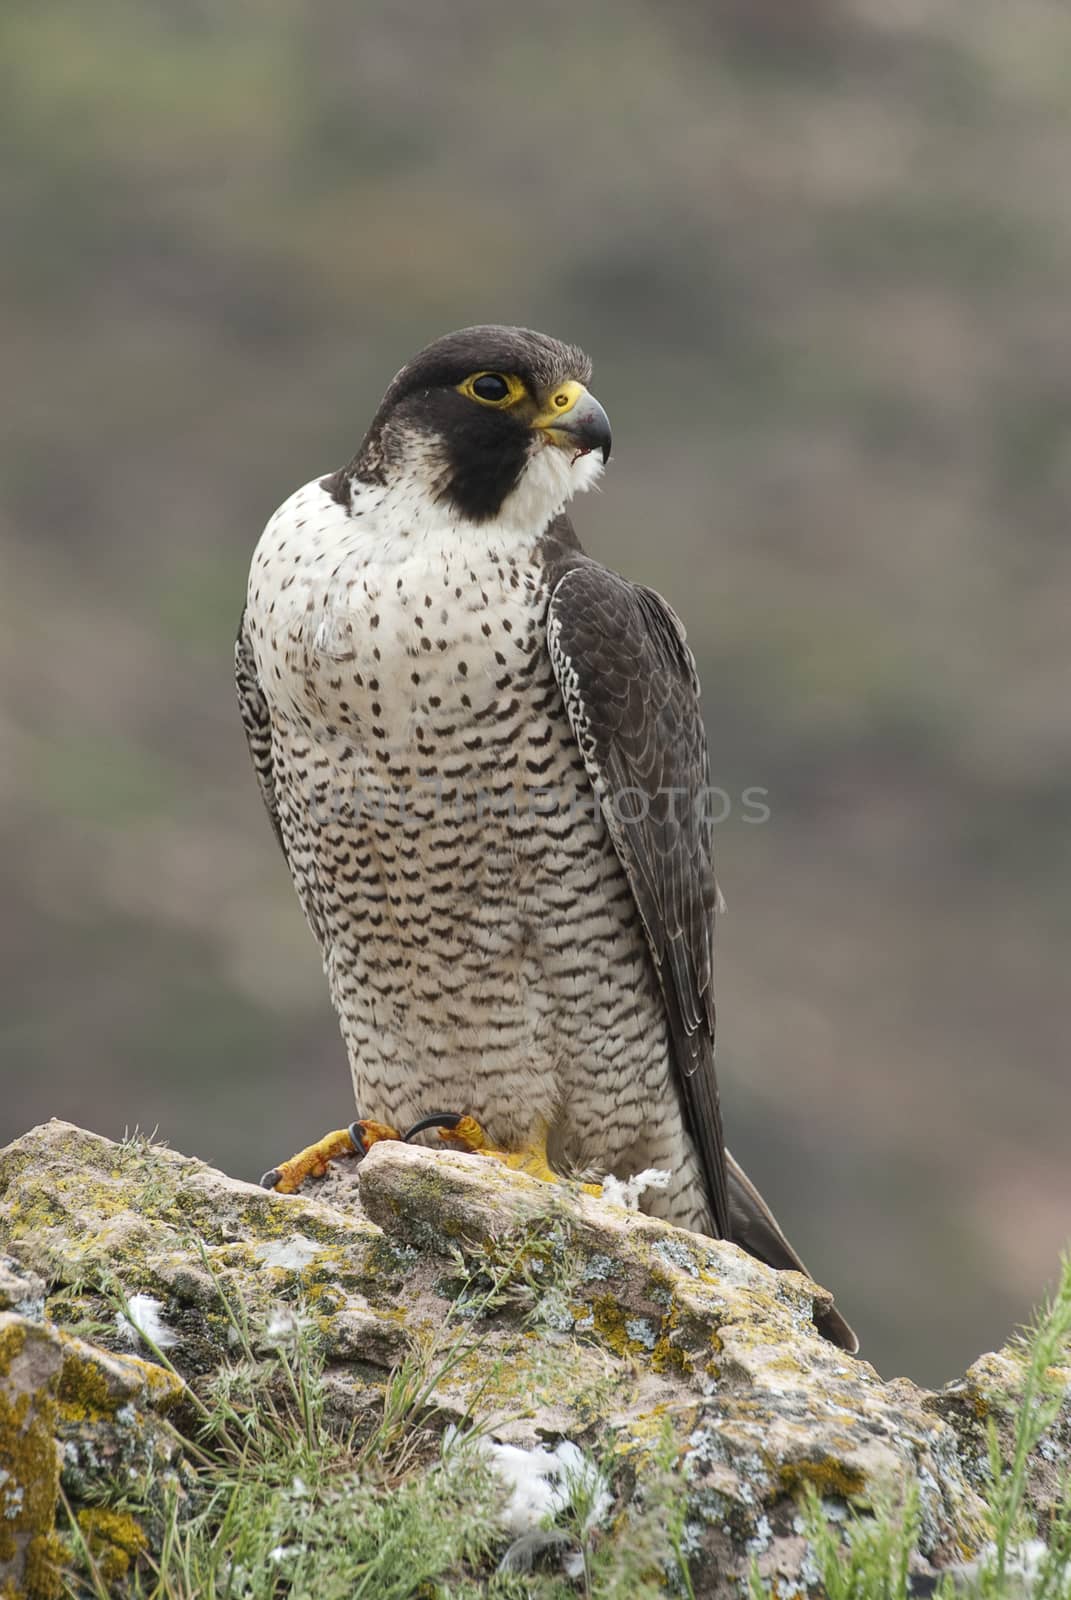 Peregrine falcon on the rock. Bird of prey, female portrait, Fal by jalonsohu@gmail.com